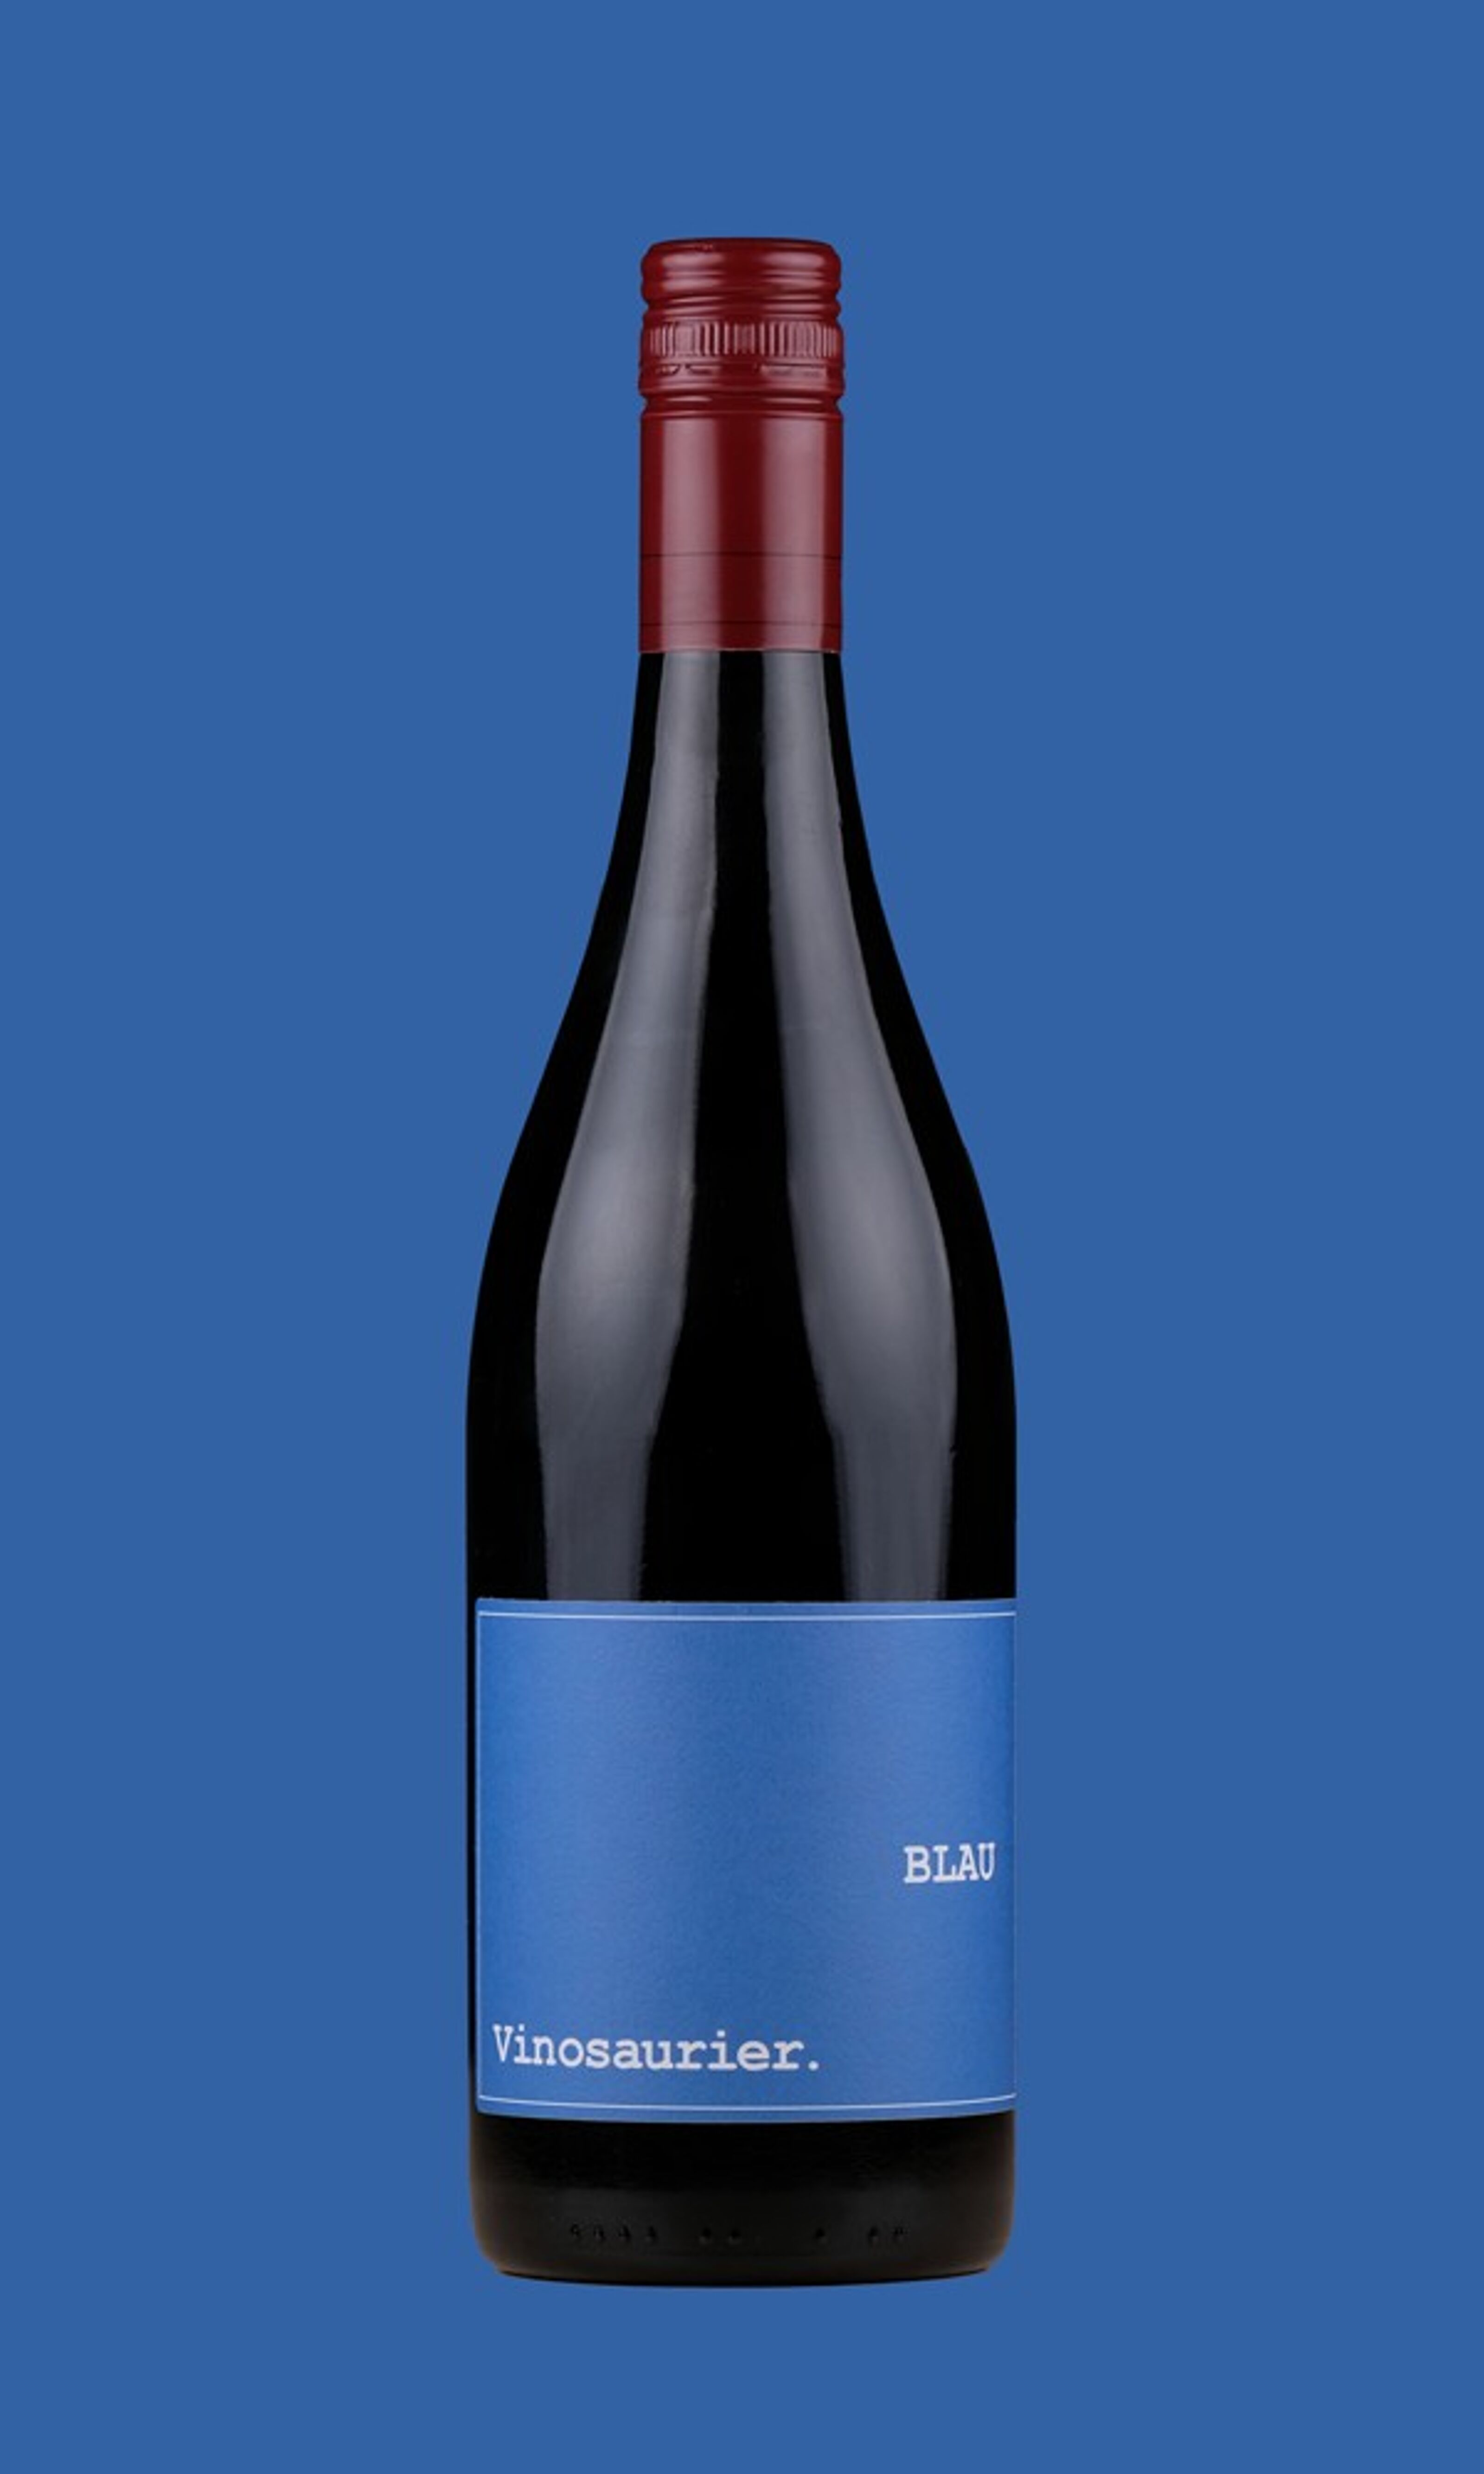 Buy - Noir wholesale vinosaurs. Pinot blue